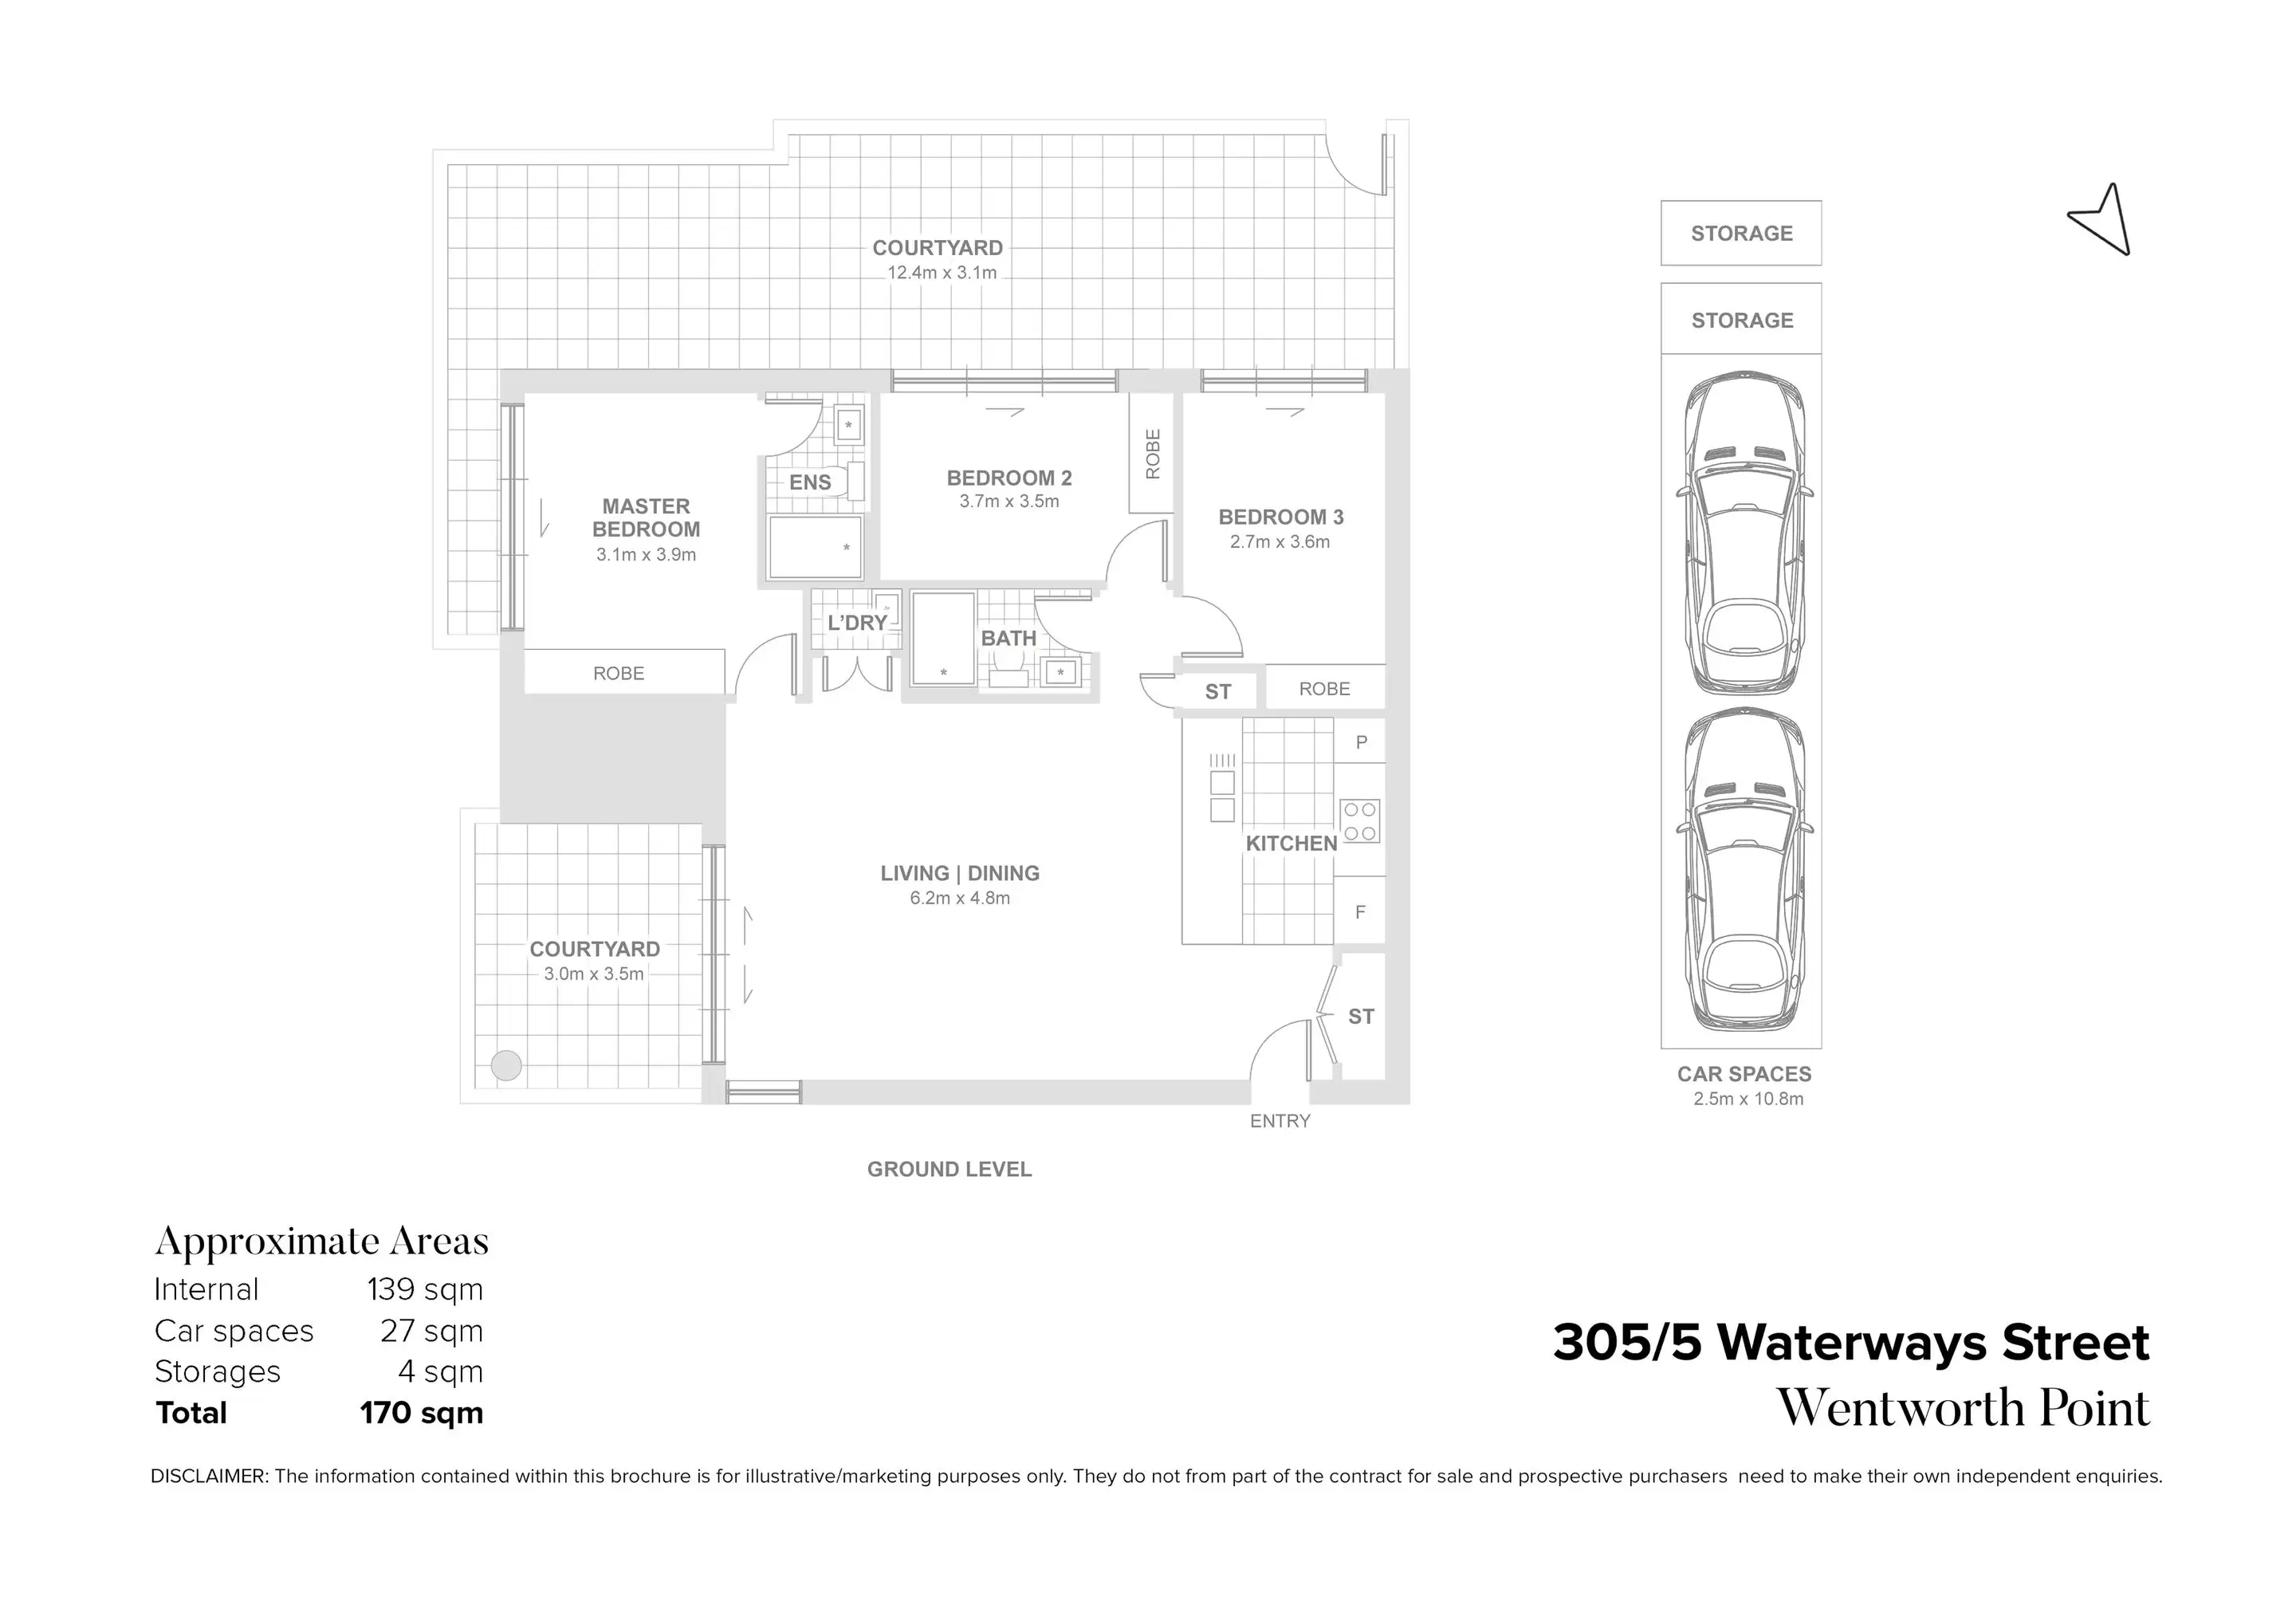 305/5 Waterways Street, Wentworth Point Sold by Chidiac Realty - floorplan